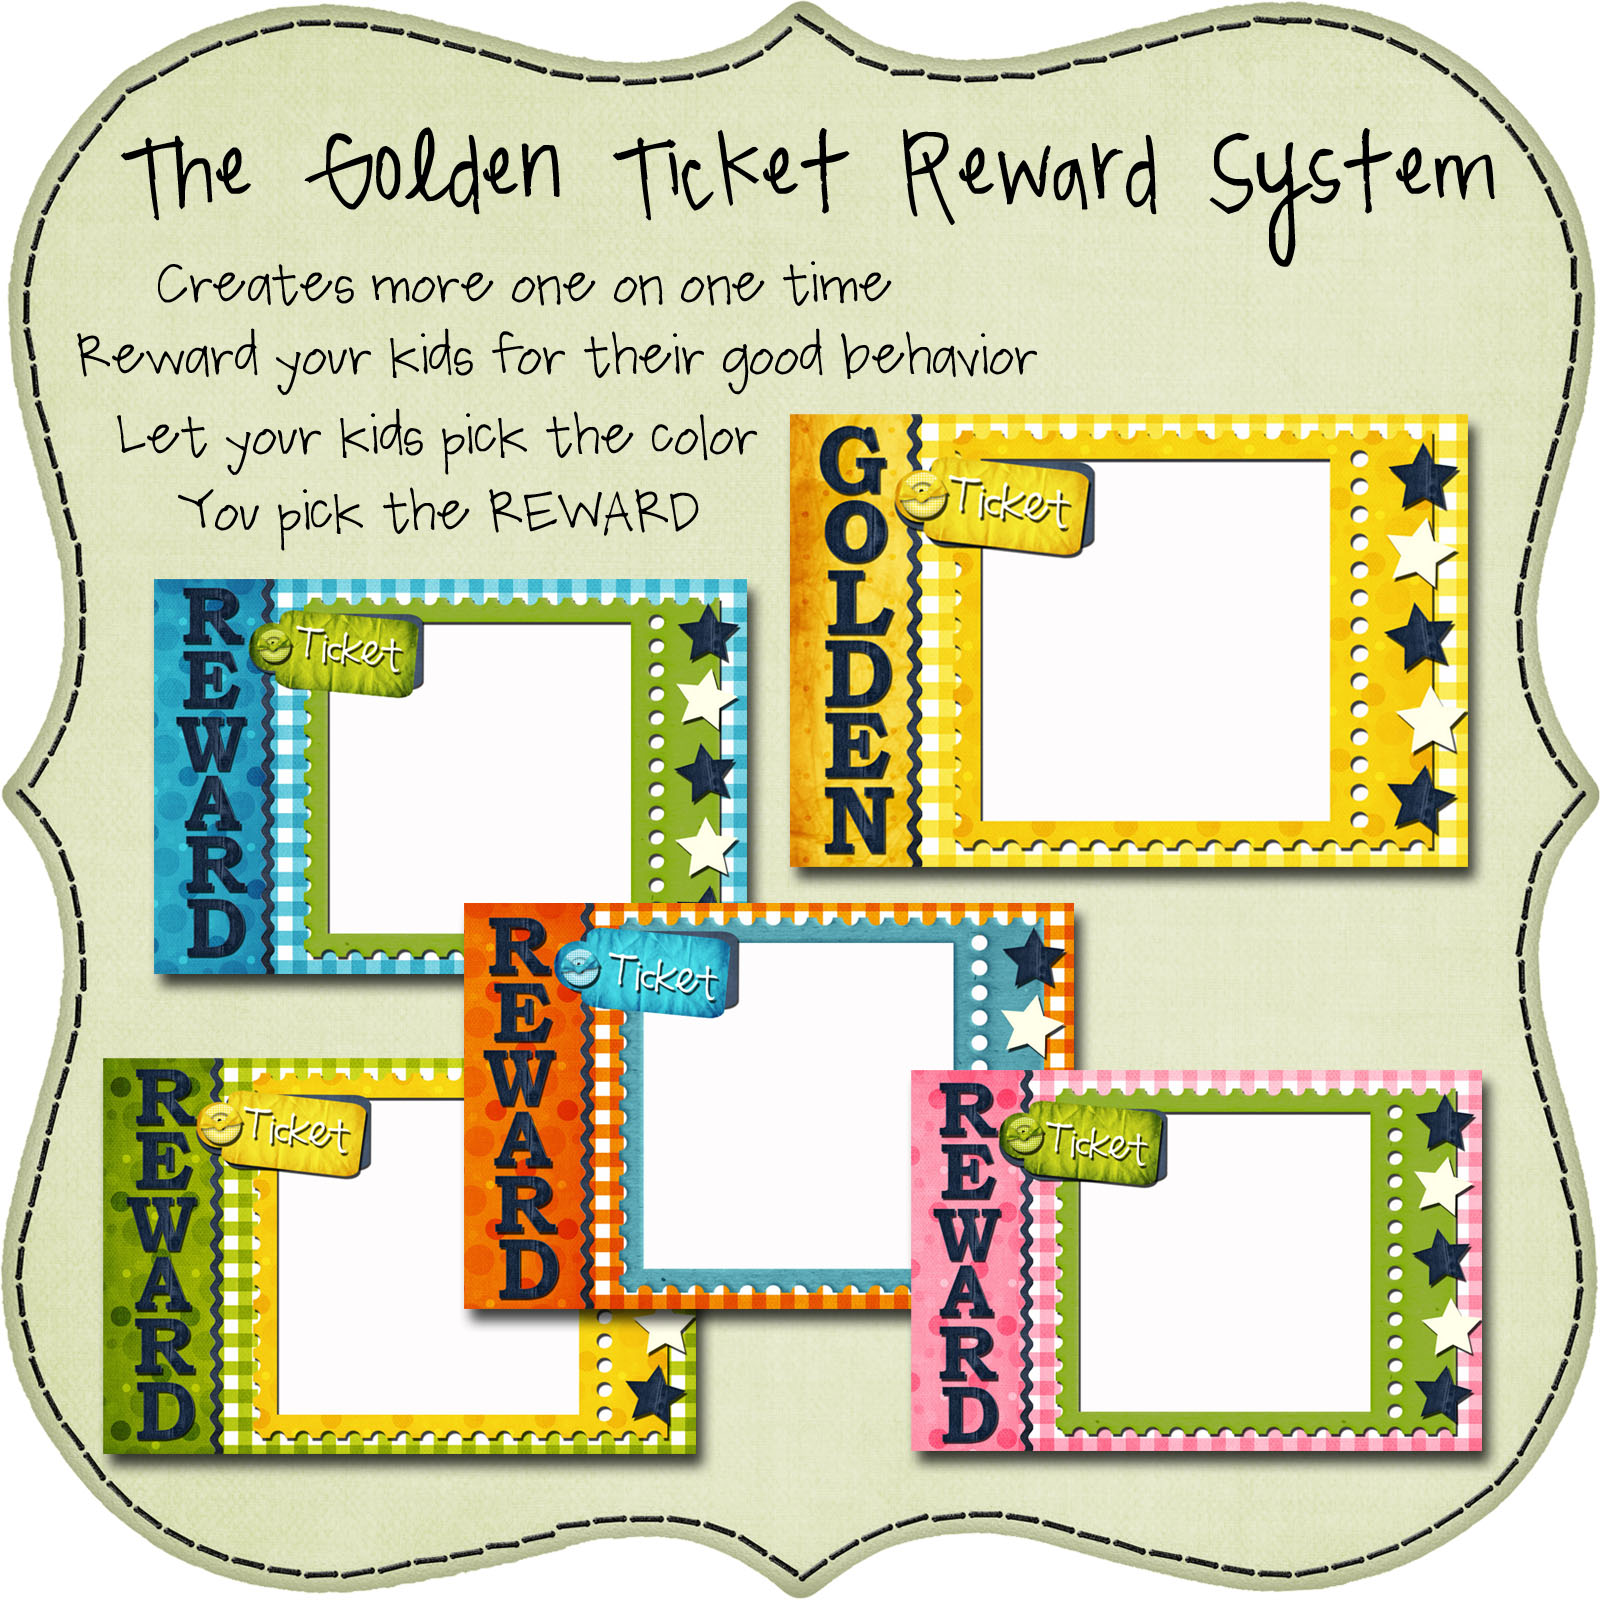 My Digital Creations: The Golden Ticket Reward System - NEW RELEASE